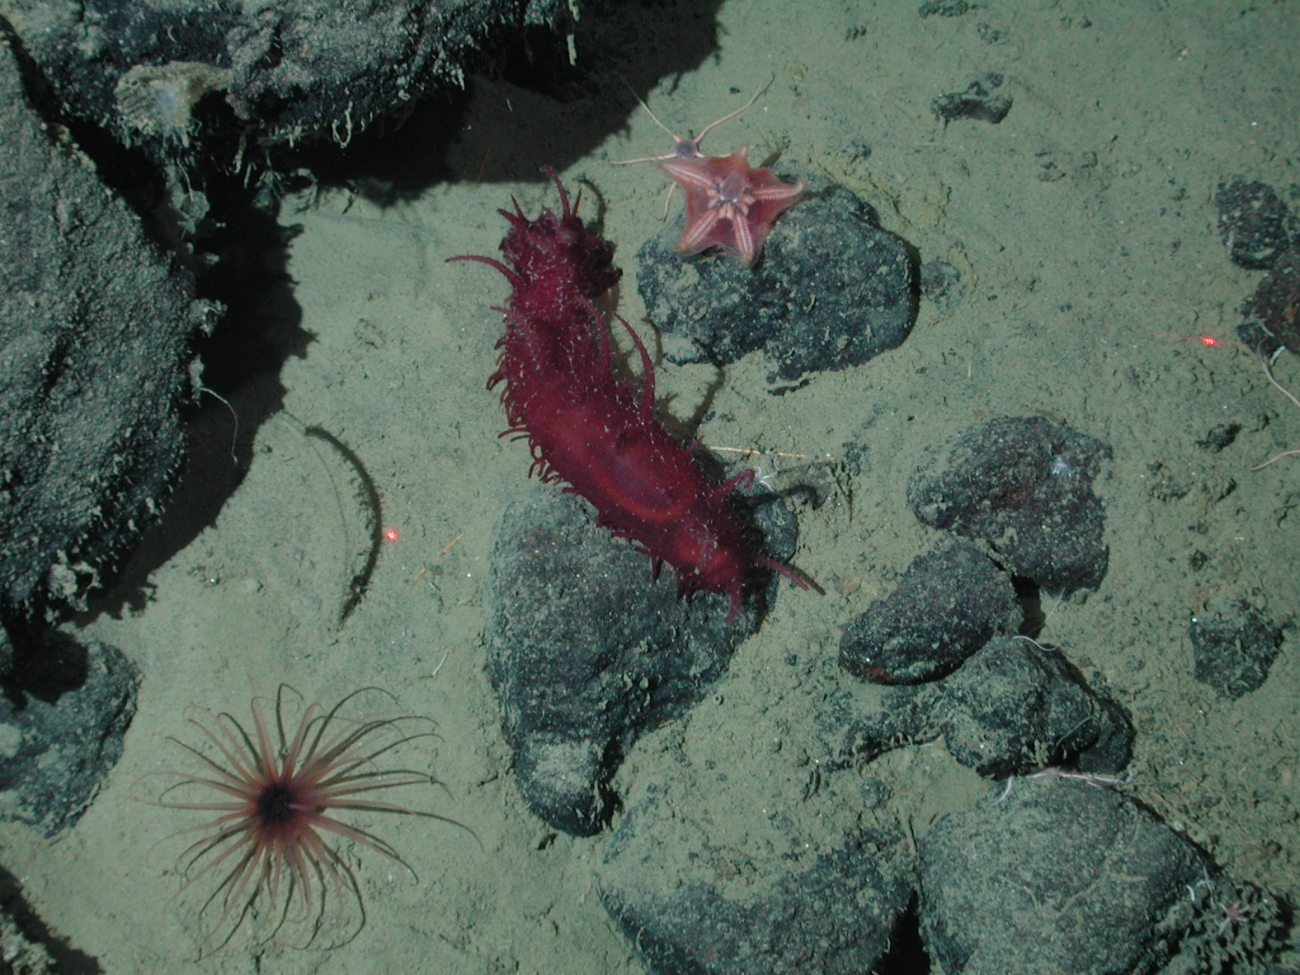 Red spiked sea cucumber, cerianthid anemone, and sea star (Hymenaster koehleri) at 2854 meters water depth